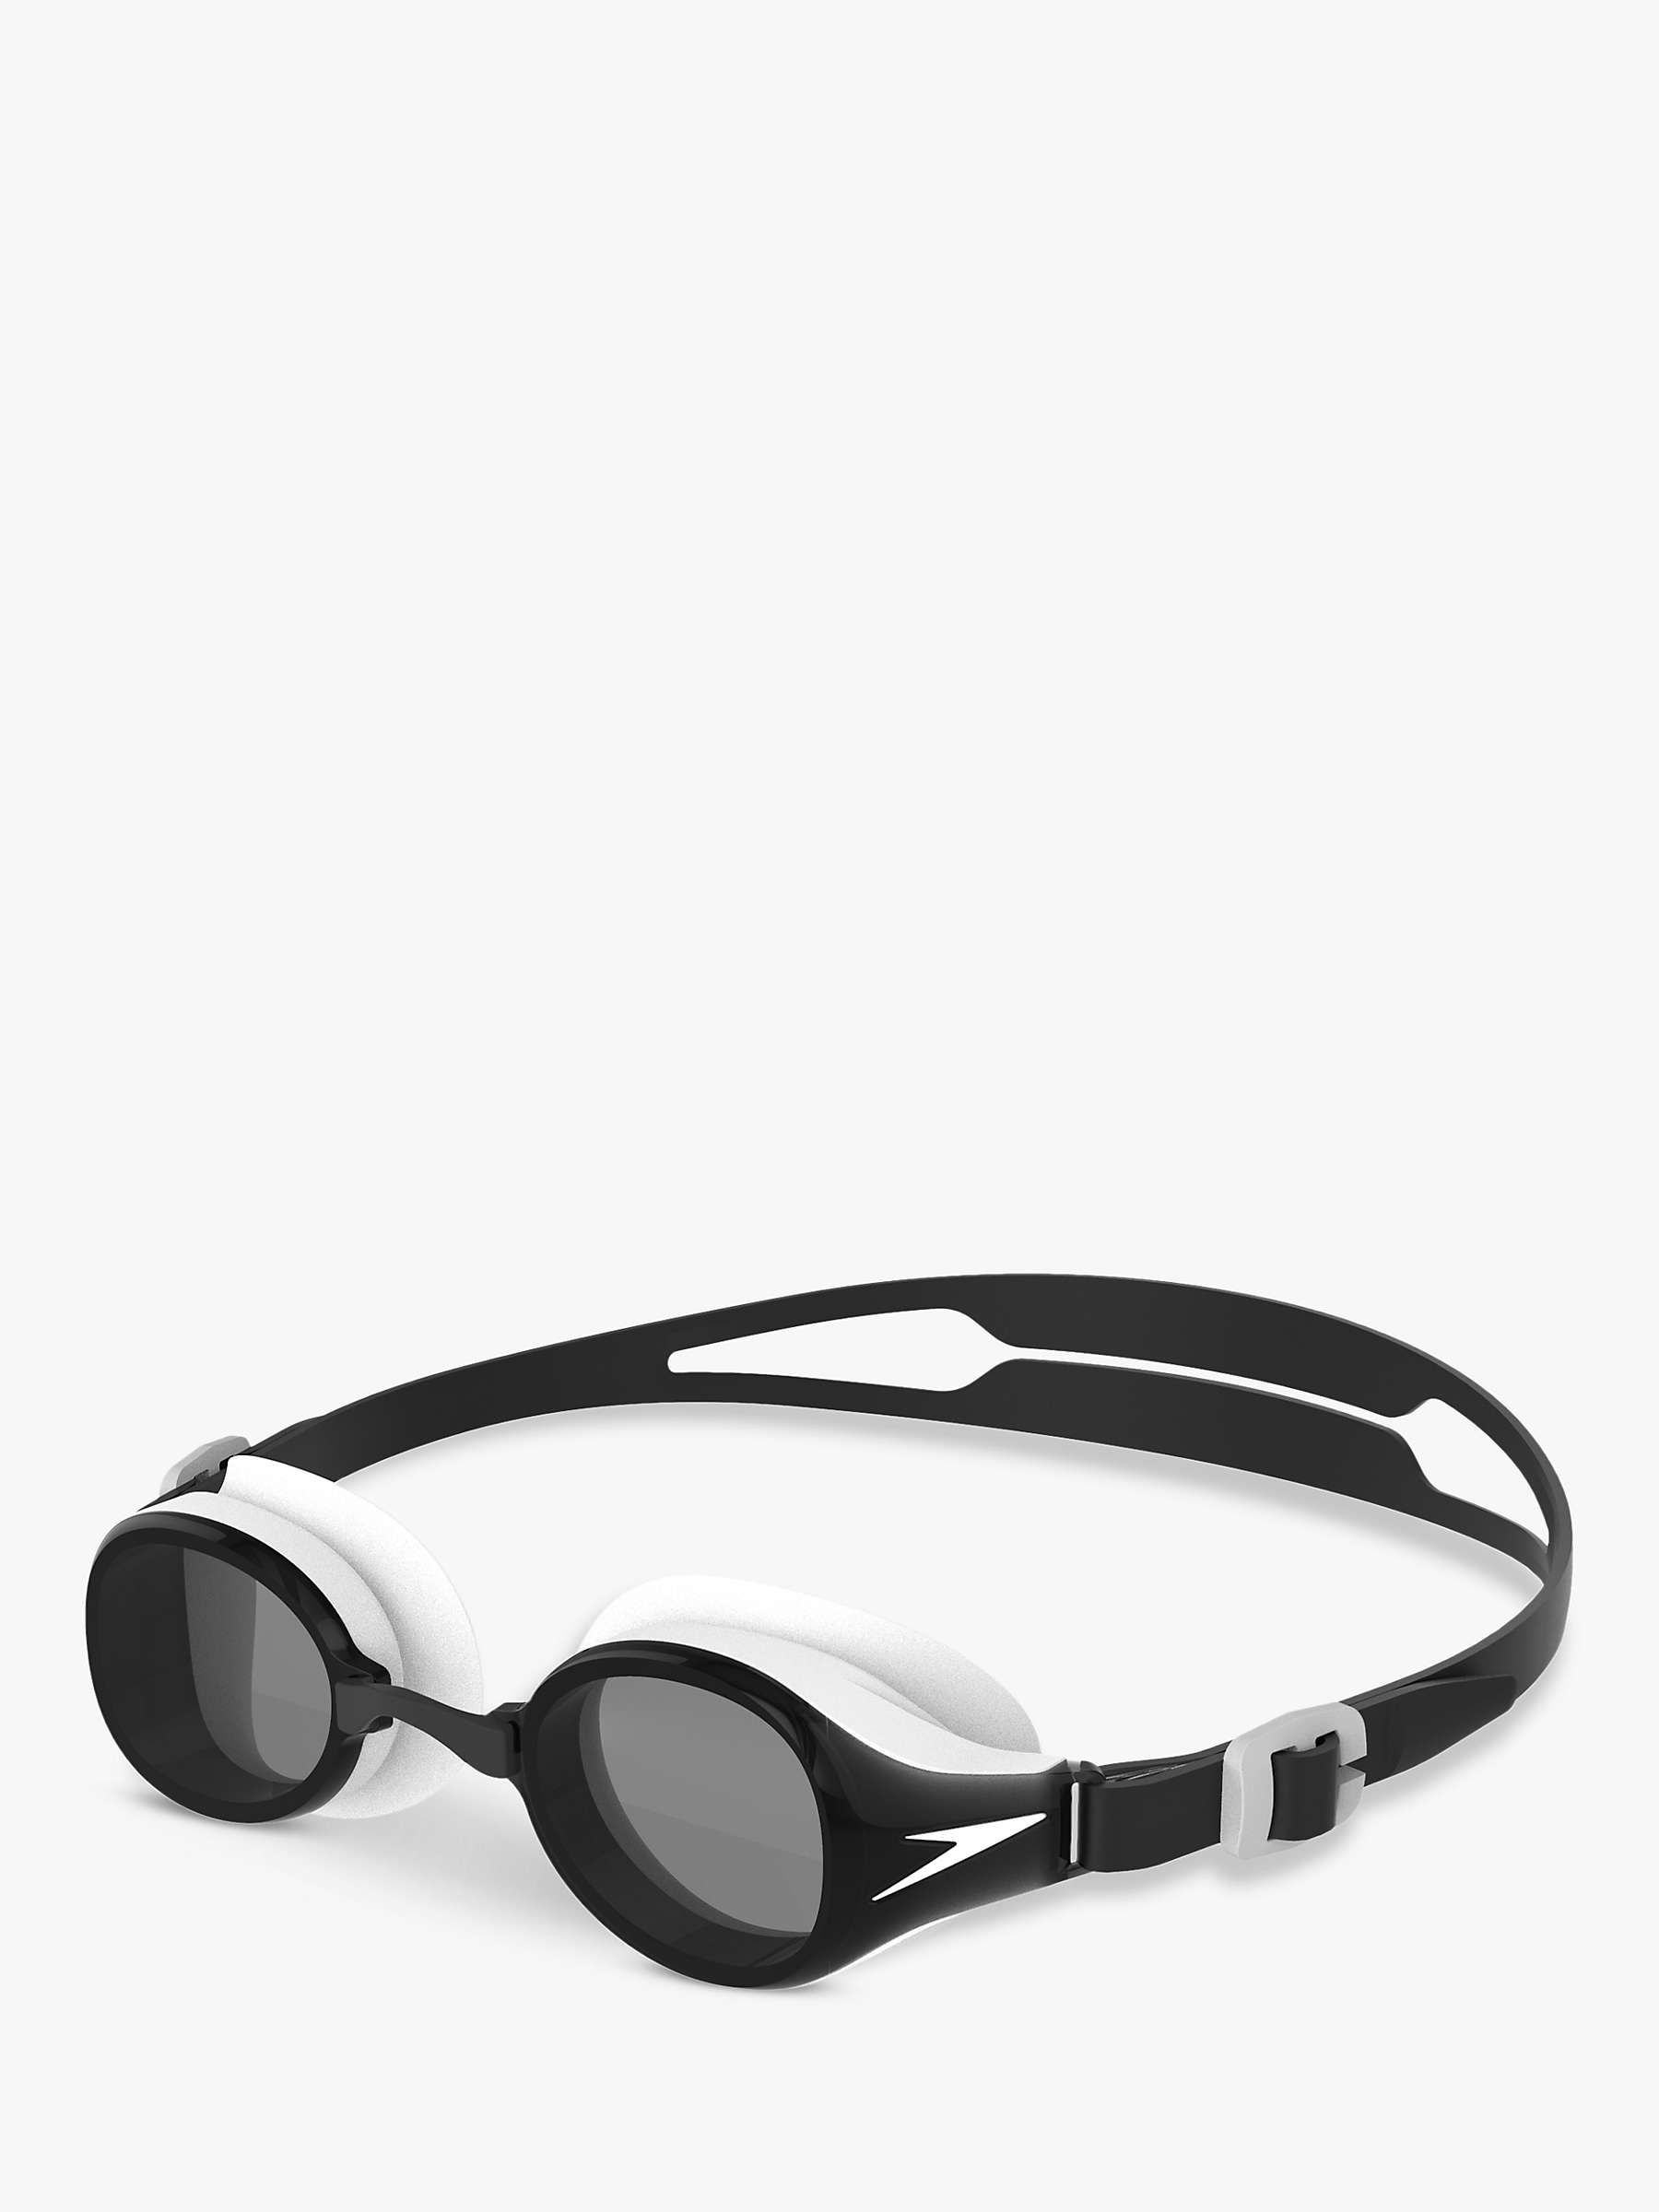 Buy Speedo Kids' Hydropure Swimming Goggles, Black/White Online at johnlewis.com